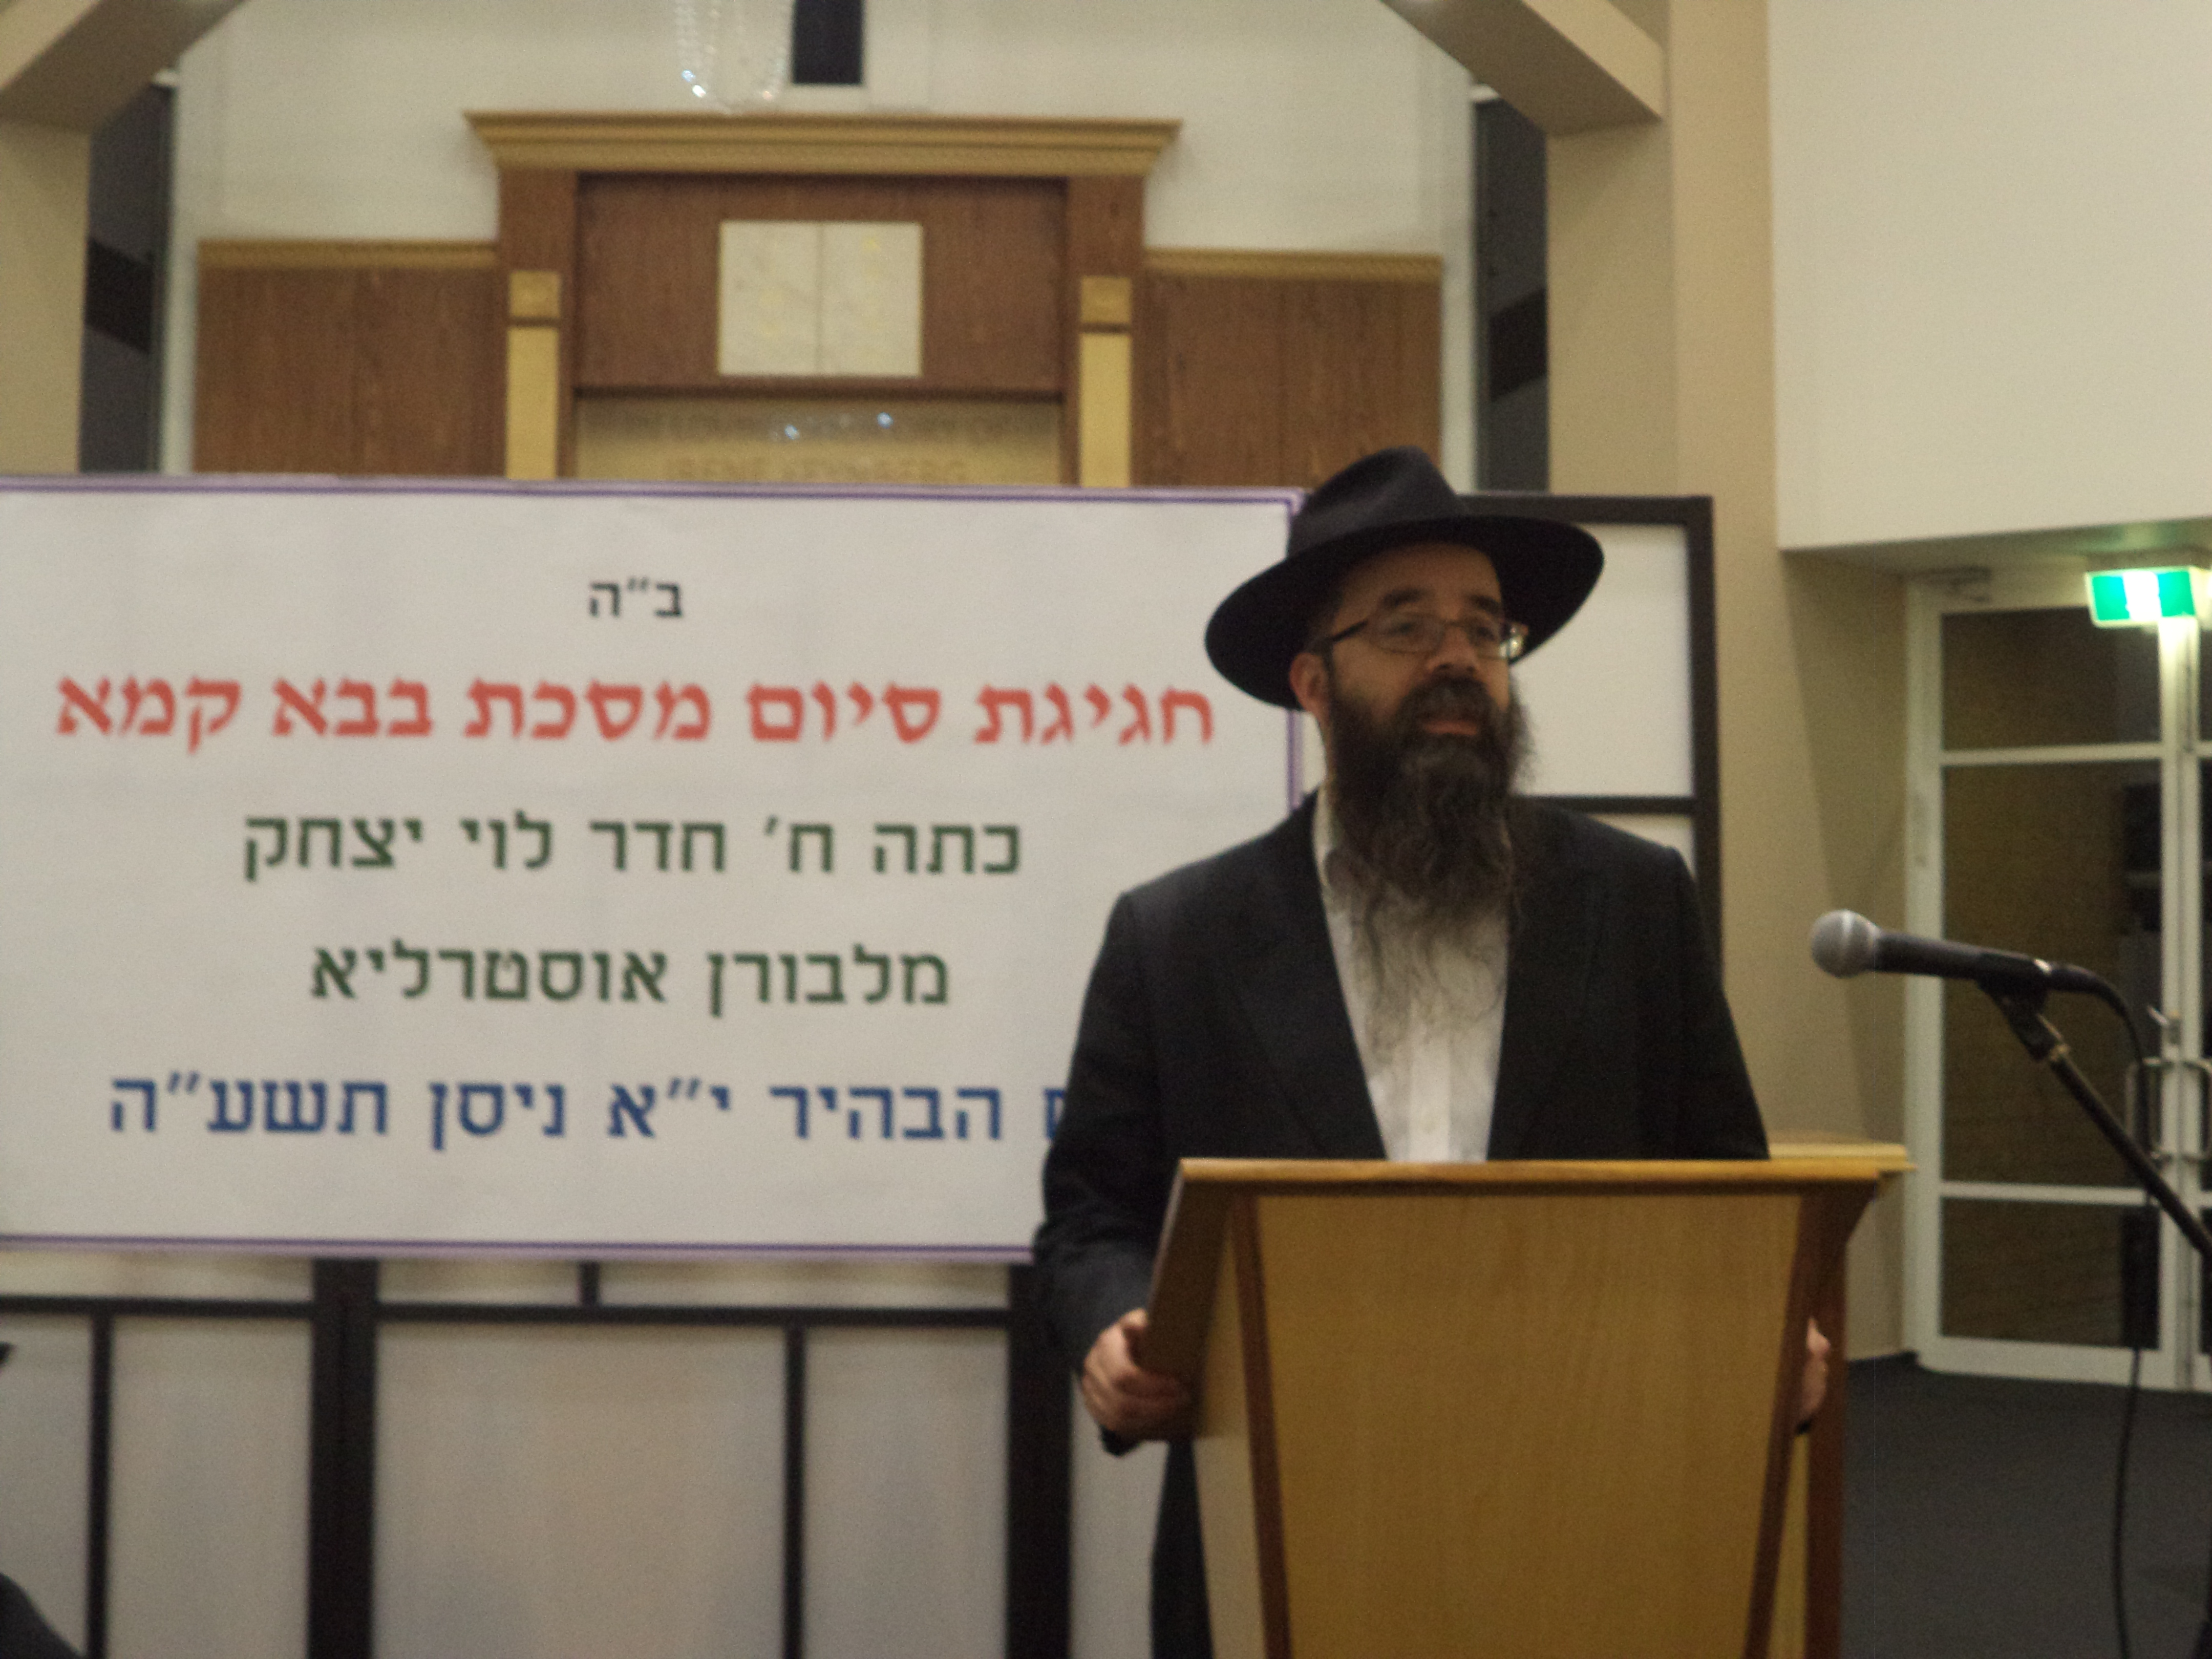 Rabbi Mendel Lipskier